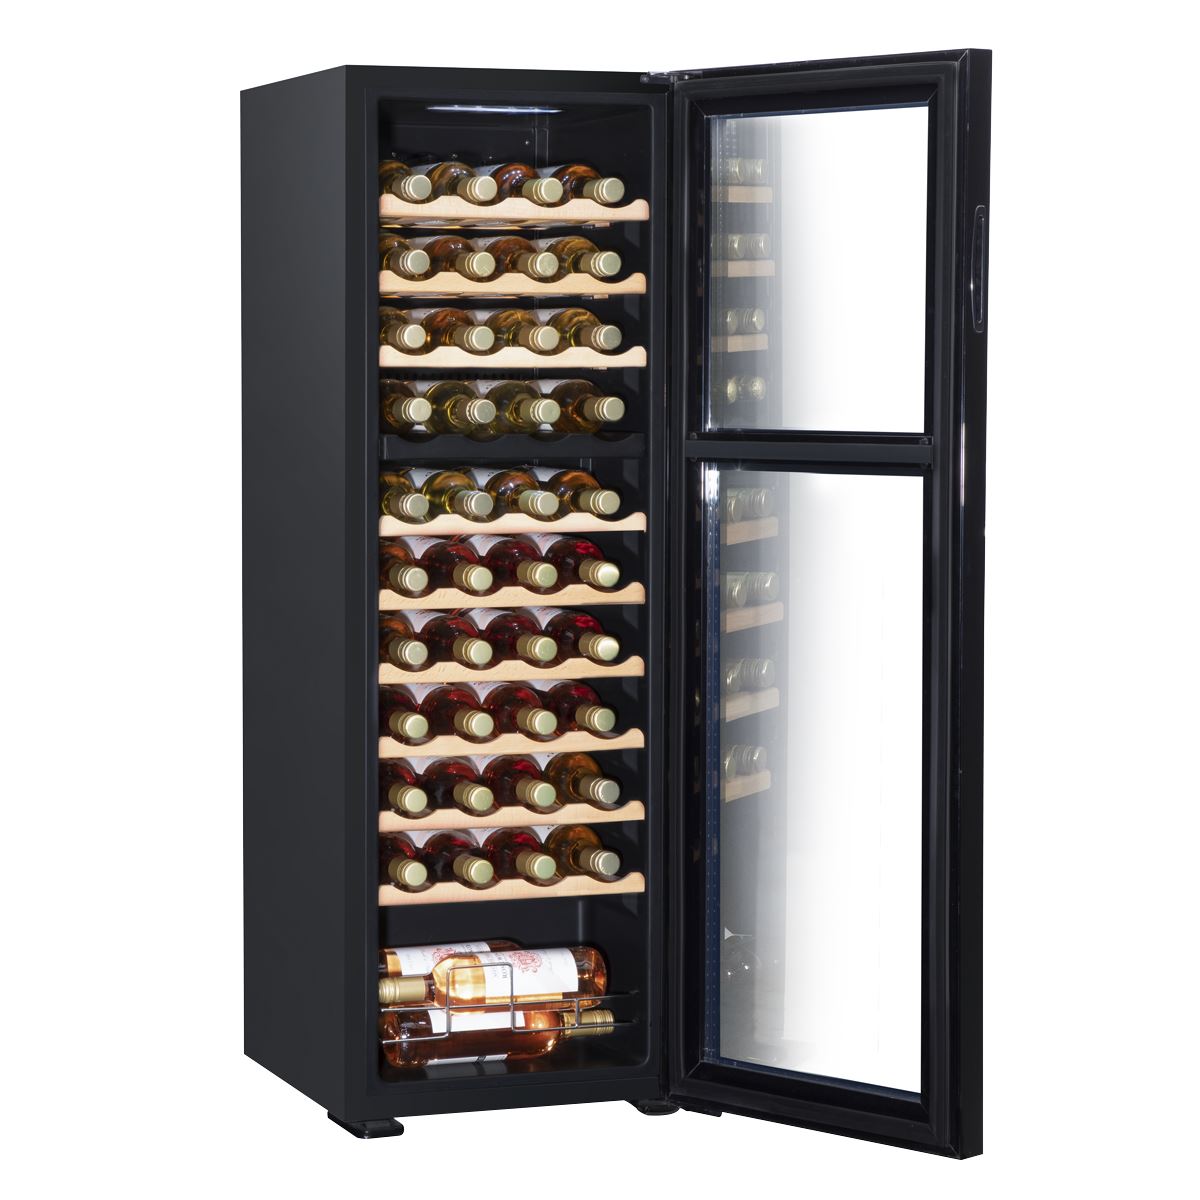 Baridi 44 Bottle Dual Zone Wine Cooler, Fridge with Digital Touchscreen Controls, Wooden Shelves & LED Light, Black